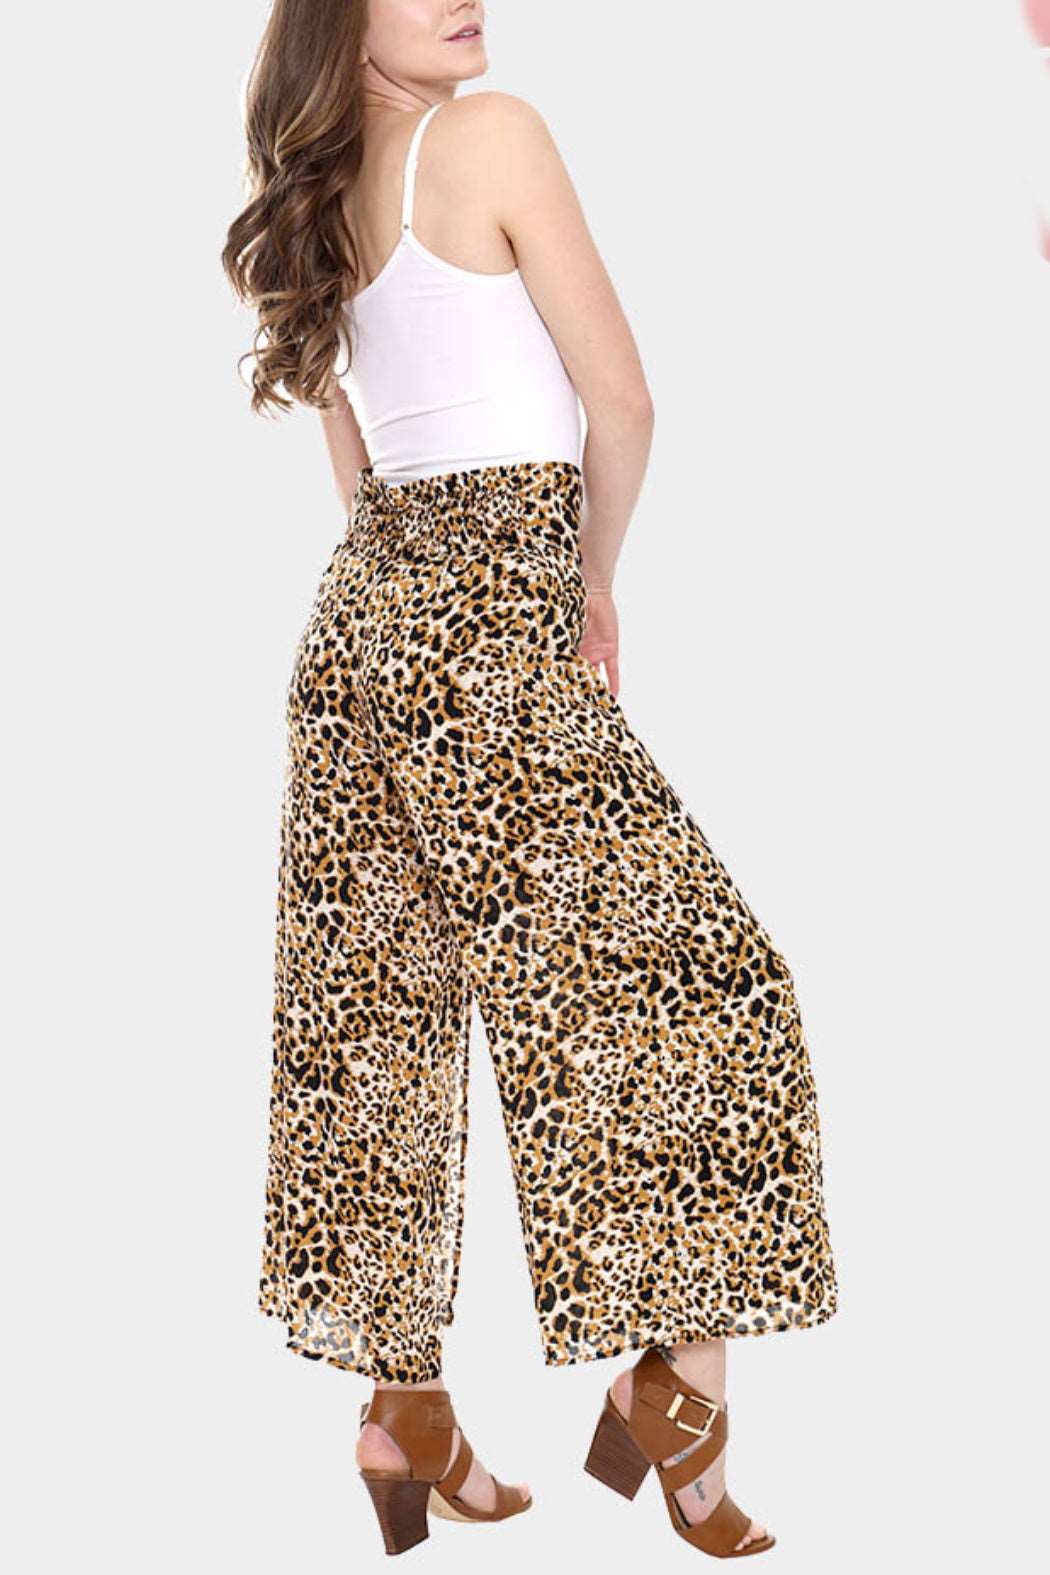 Leopard Ankle Pants - Embellish Your Life 